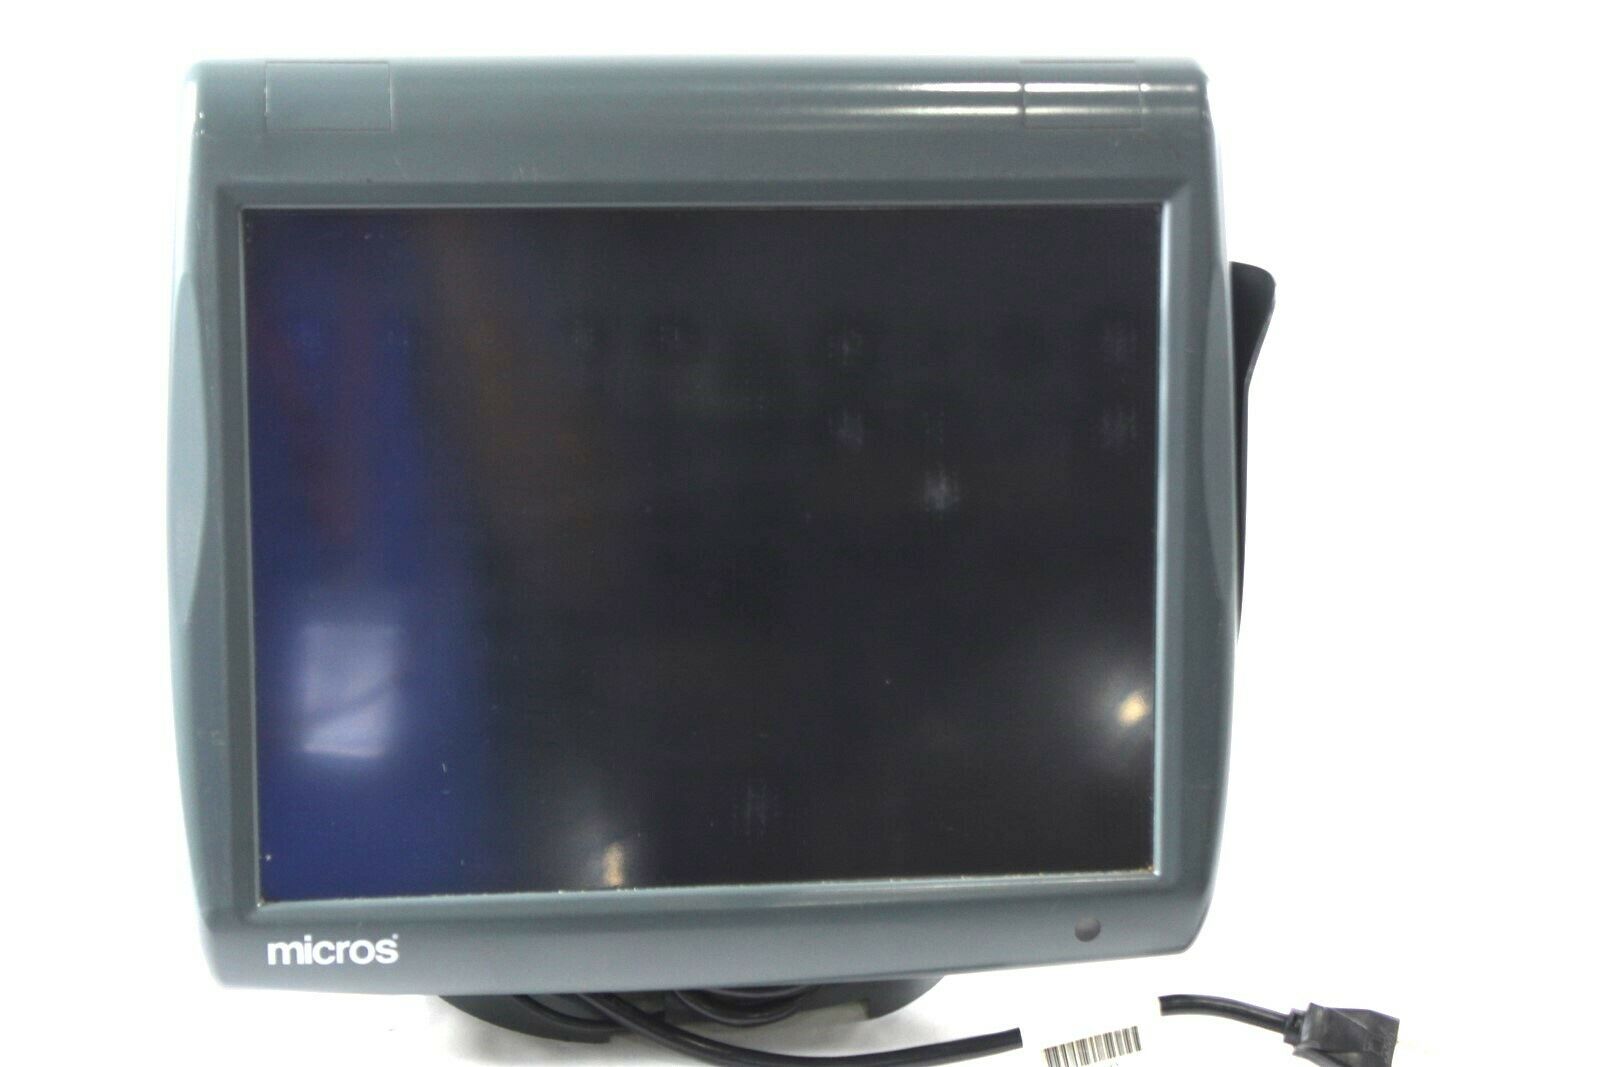 Micros Workstation 5 POS System Touchscreen Unit 400814-001 w/ Windows CE 6.0